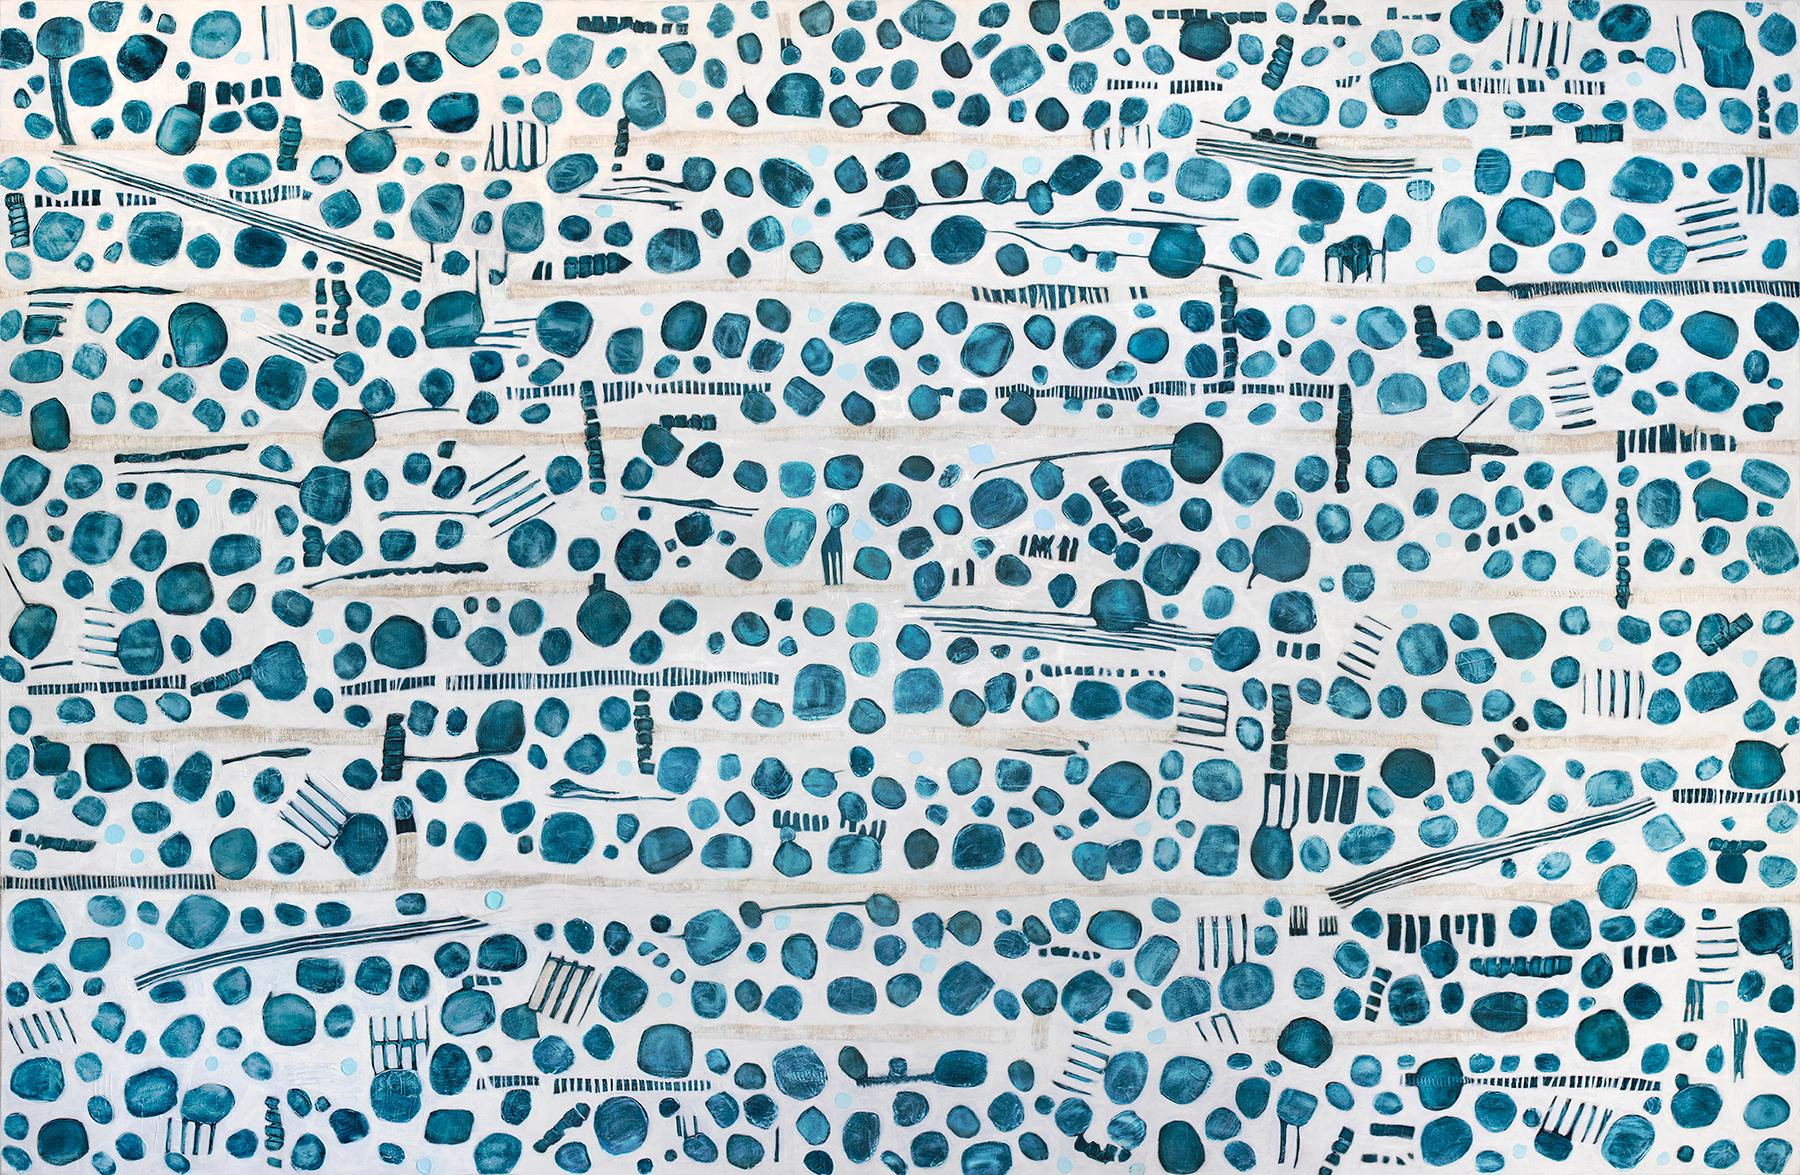 Abstract Print Sofie Swann - "Blueberry Hill, " Impression giclée en édition limitée, 24" x 36".